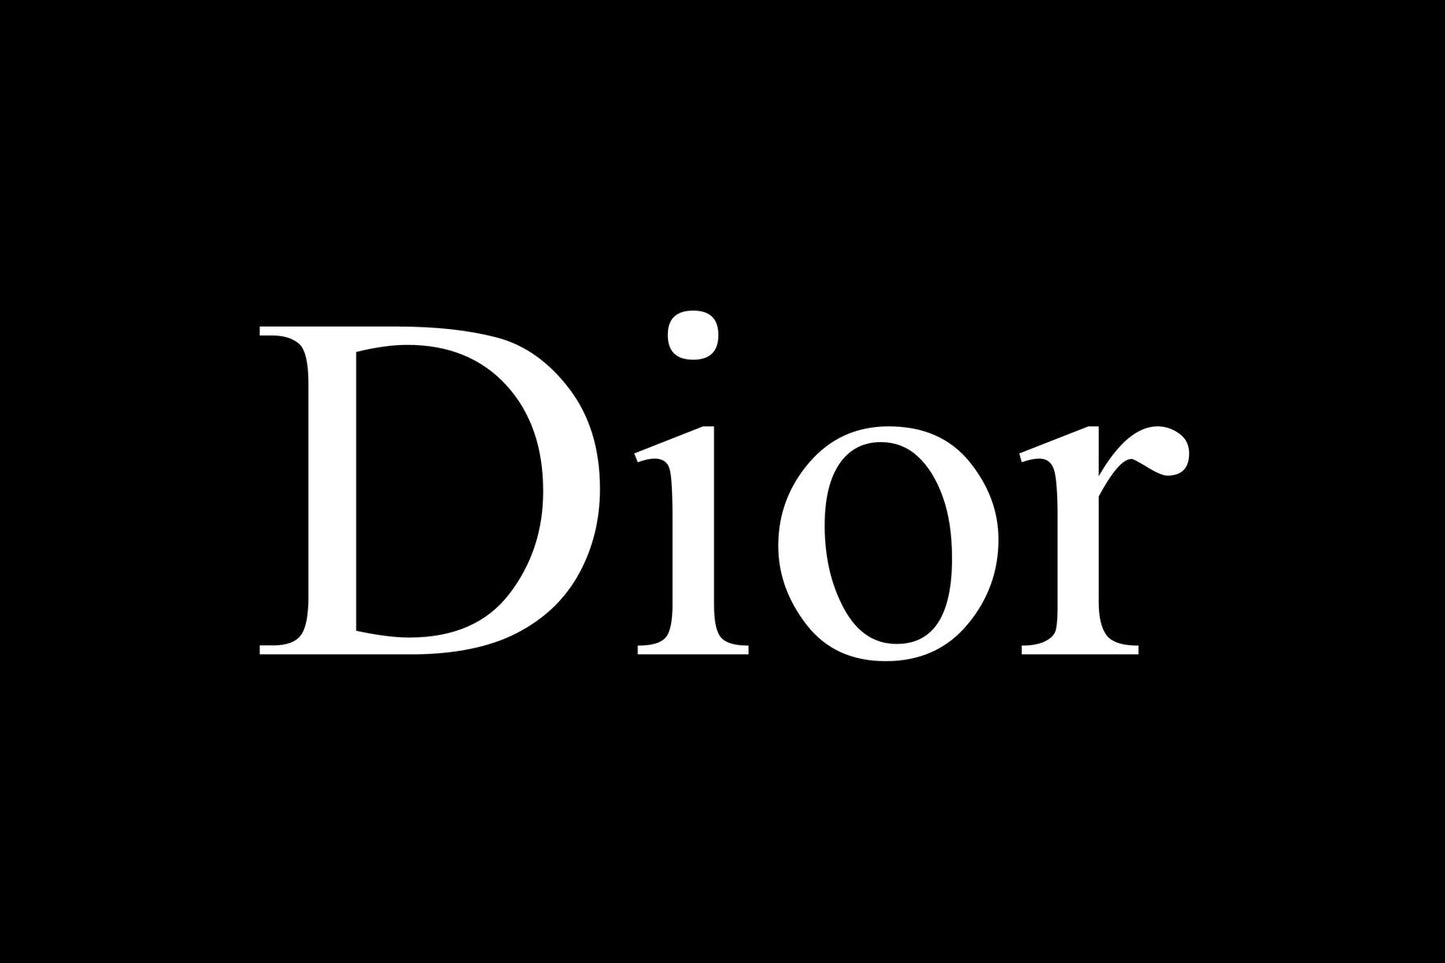 Christian Dior Sauvage EDT 3.4 oz 100 ml